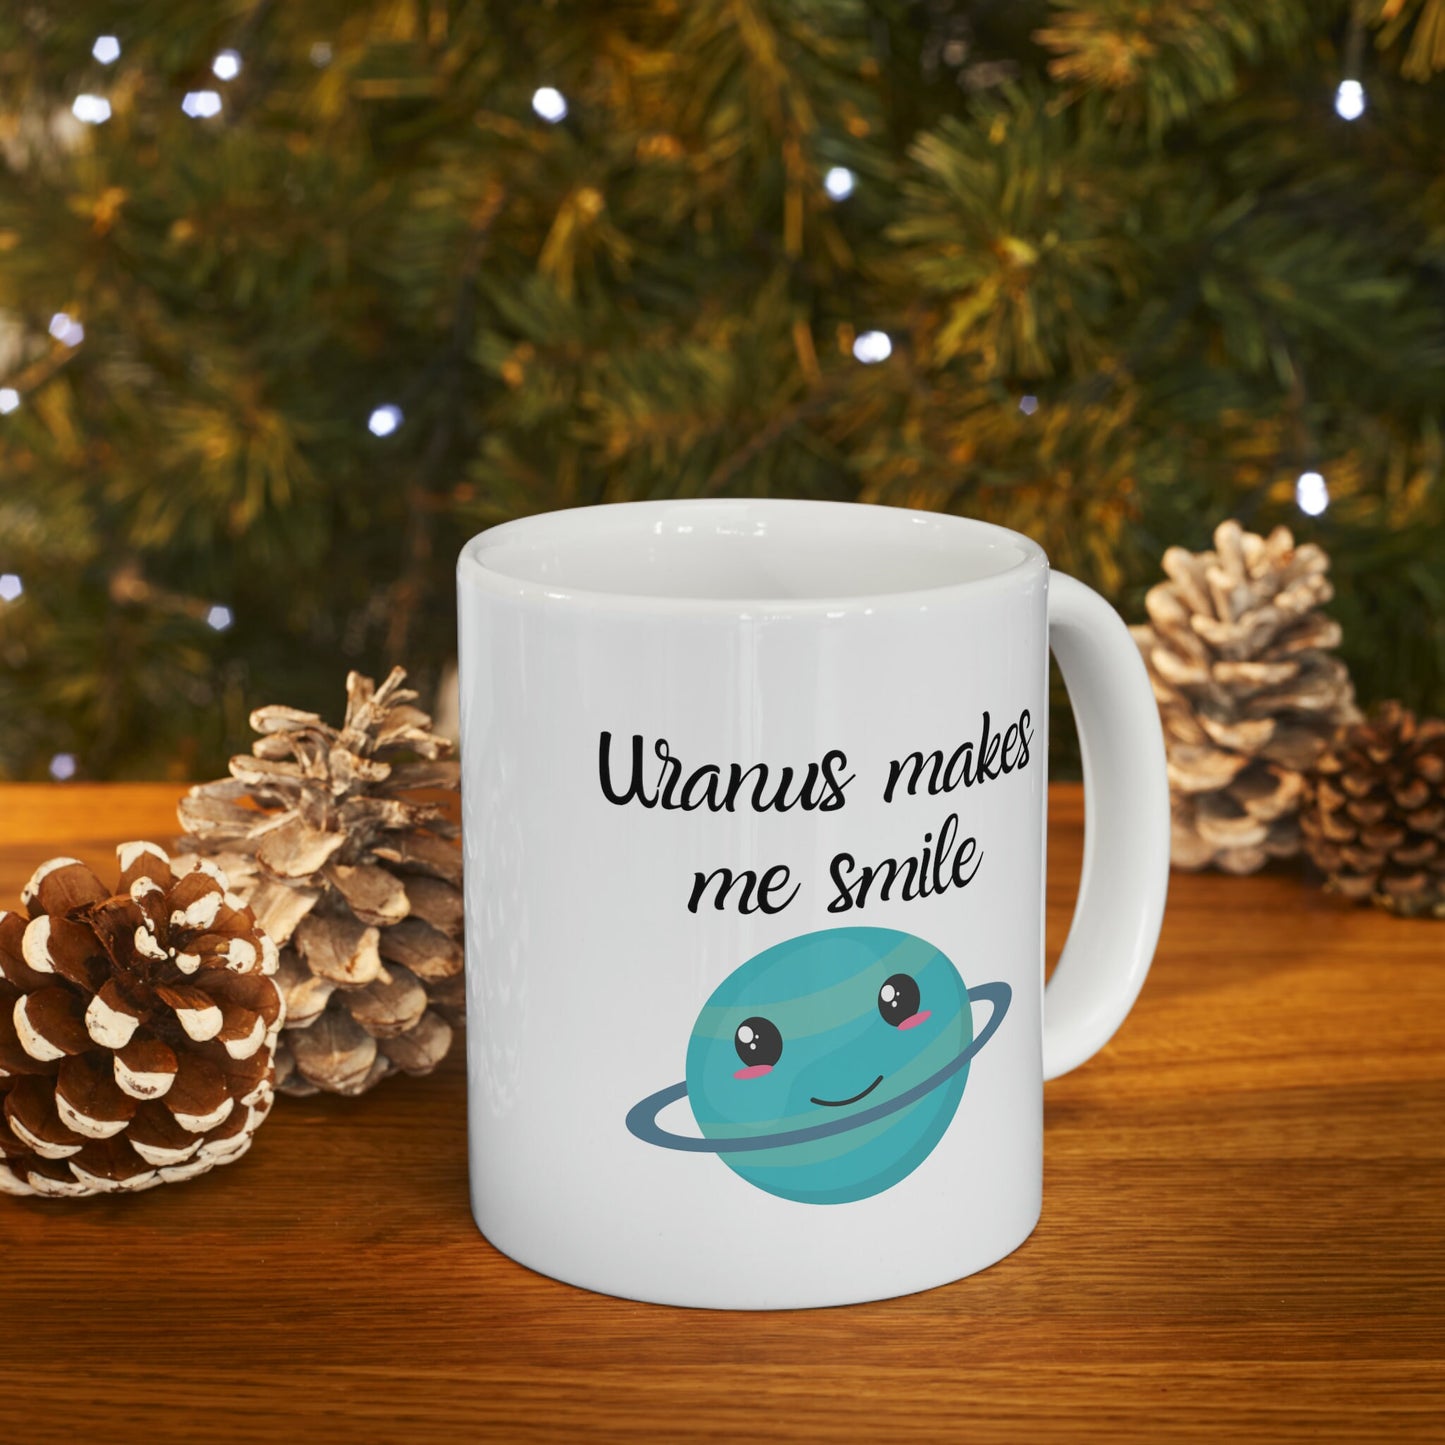 Uranus makes me Smile Coffee Mug, Uranus Mug, Cute Uranus Planet Mug, Funny Mug from Uranus, Drink from Uranus, Uranus Ceramic Mug,